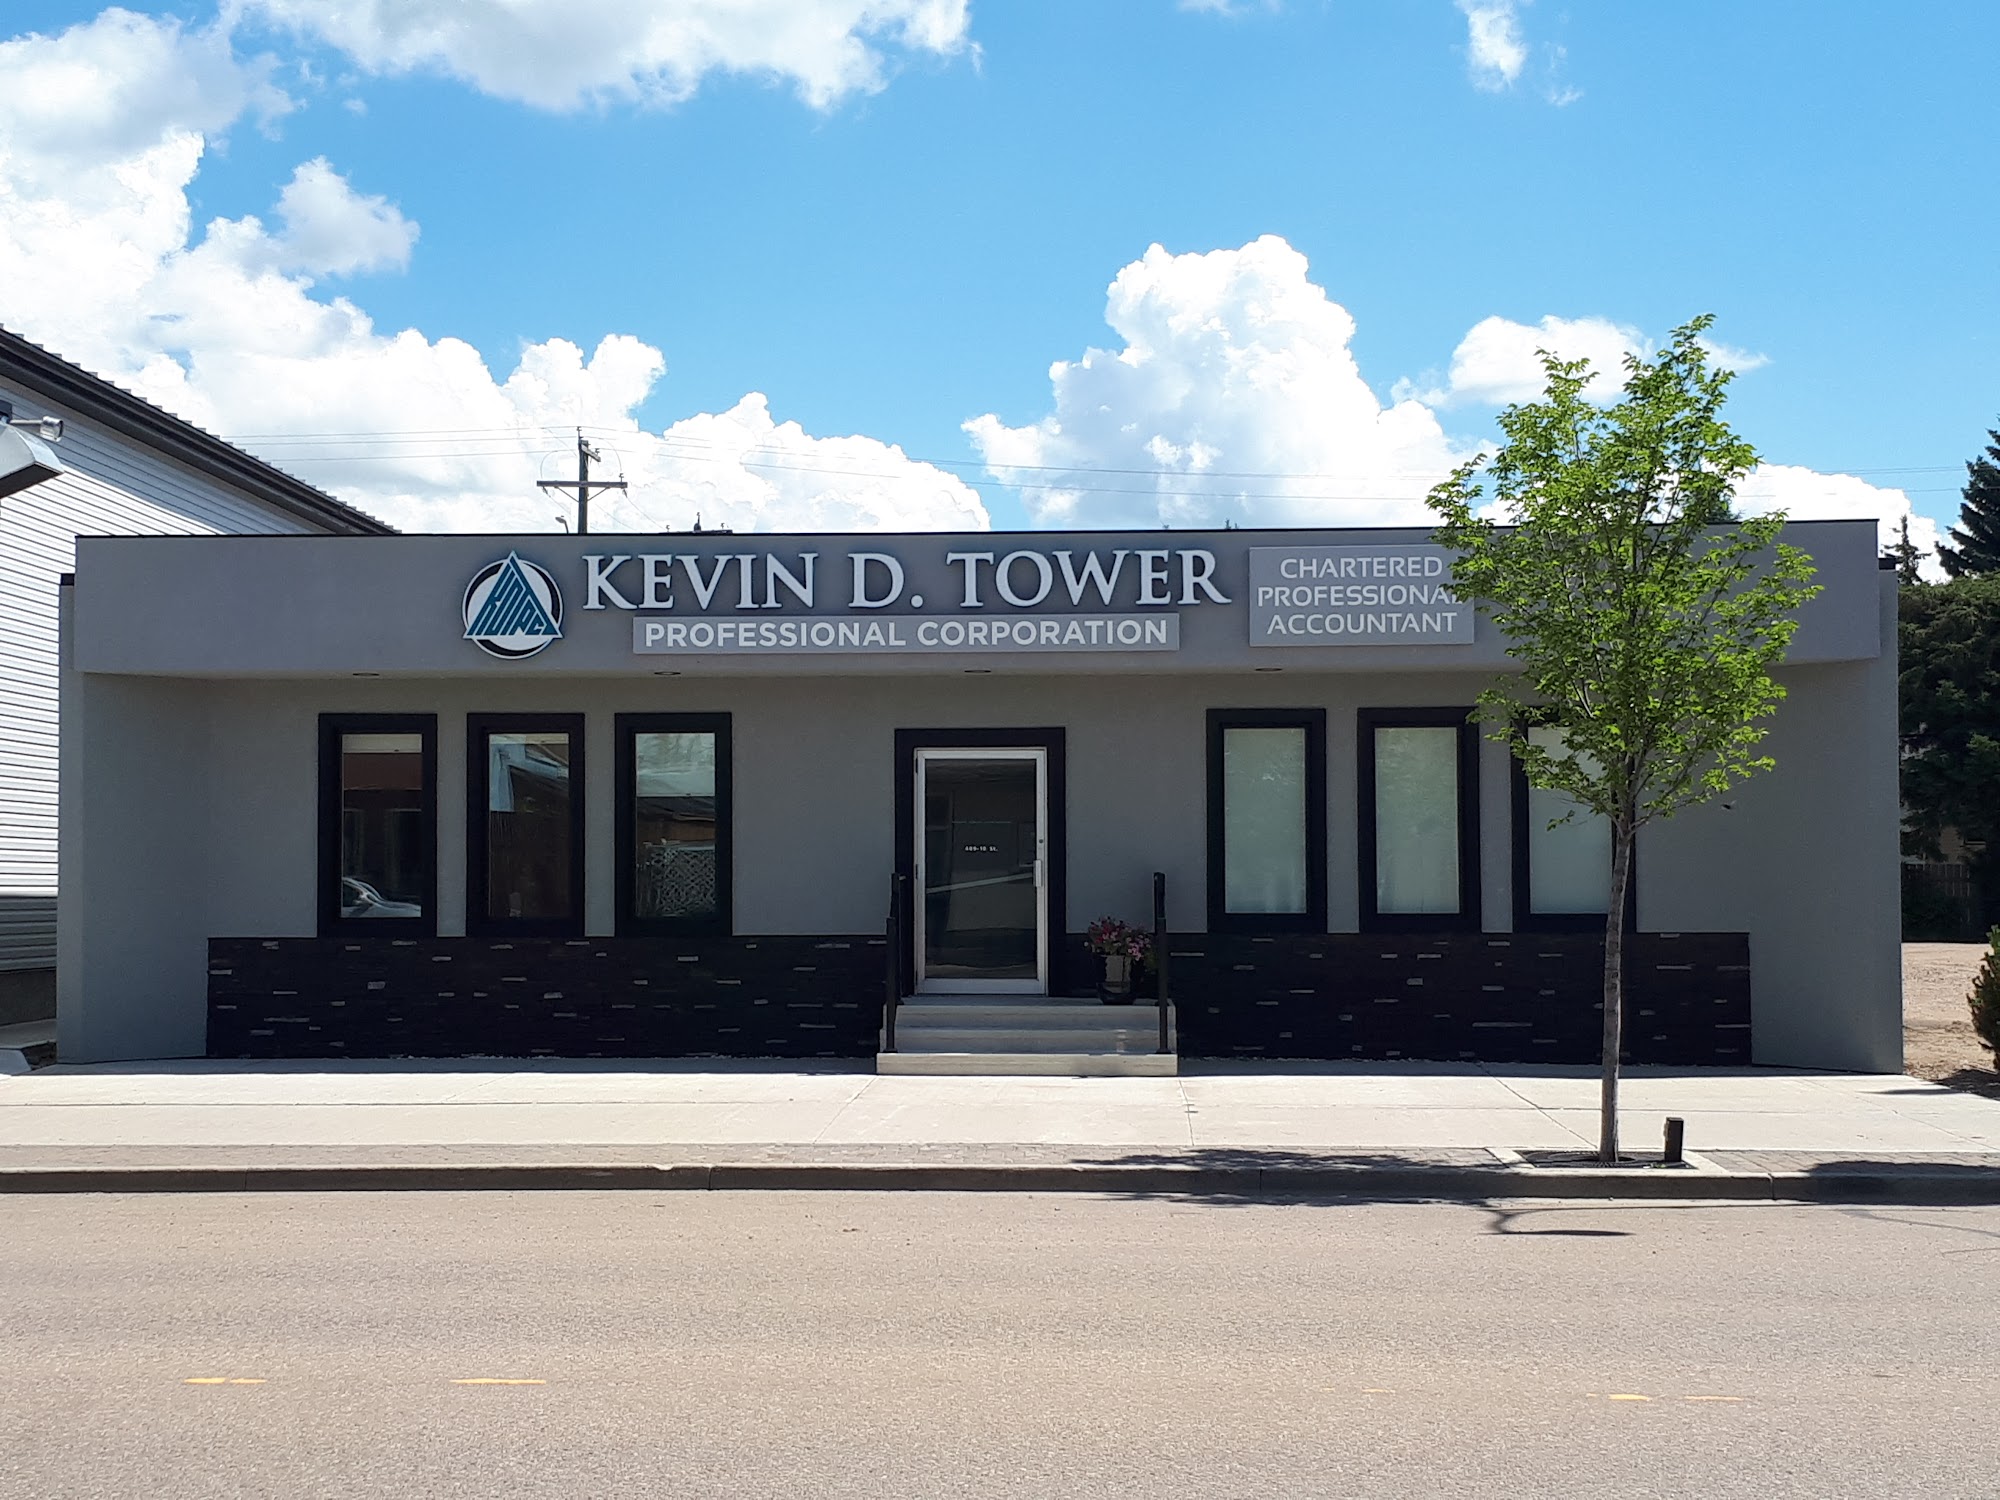 Kevin D. Tower Professional Corporation 409 10 St, Wainwright Alberta T9W 1N9